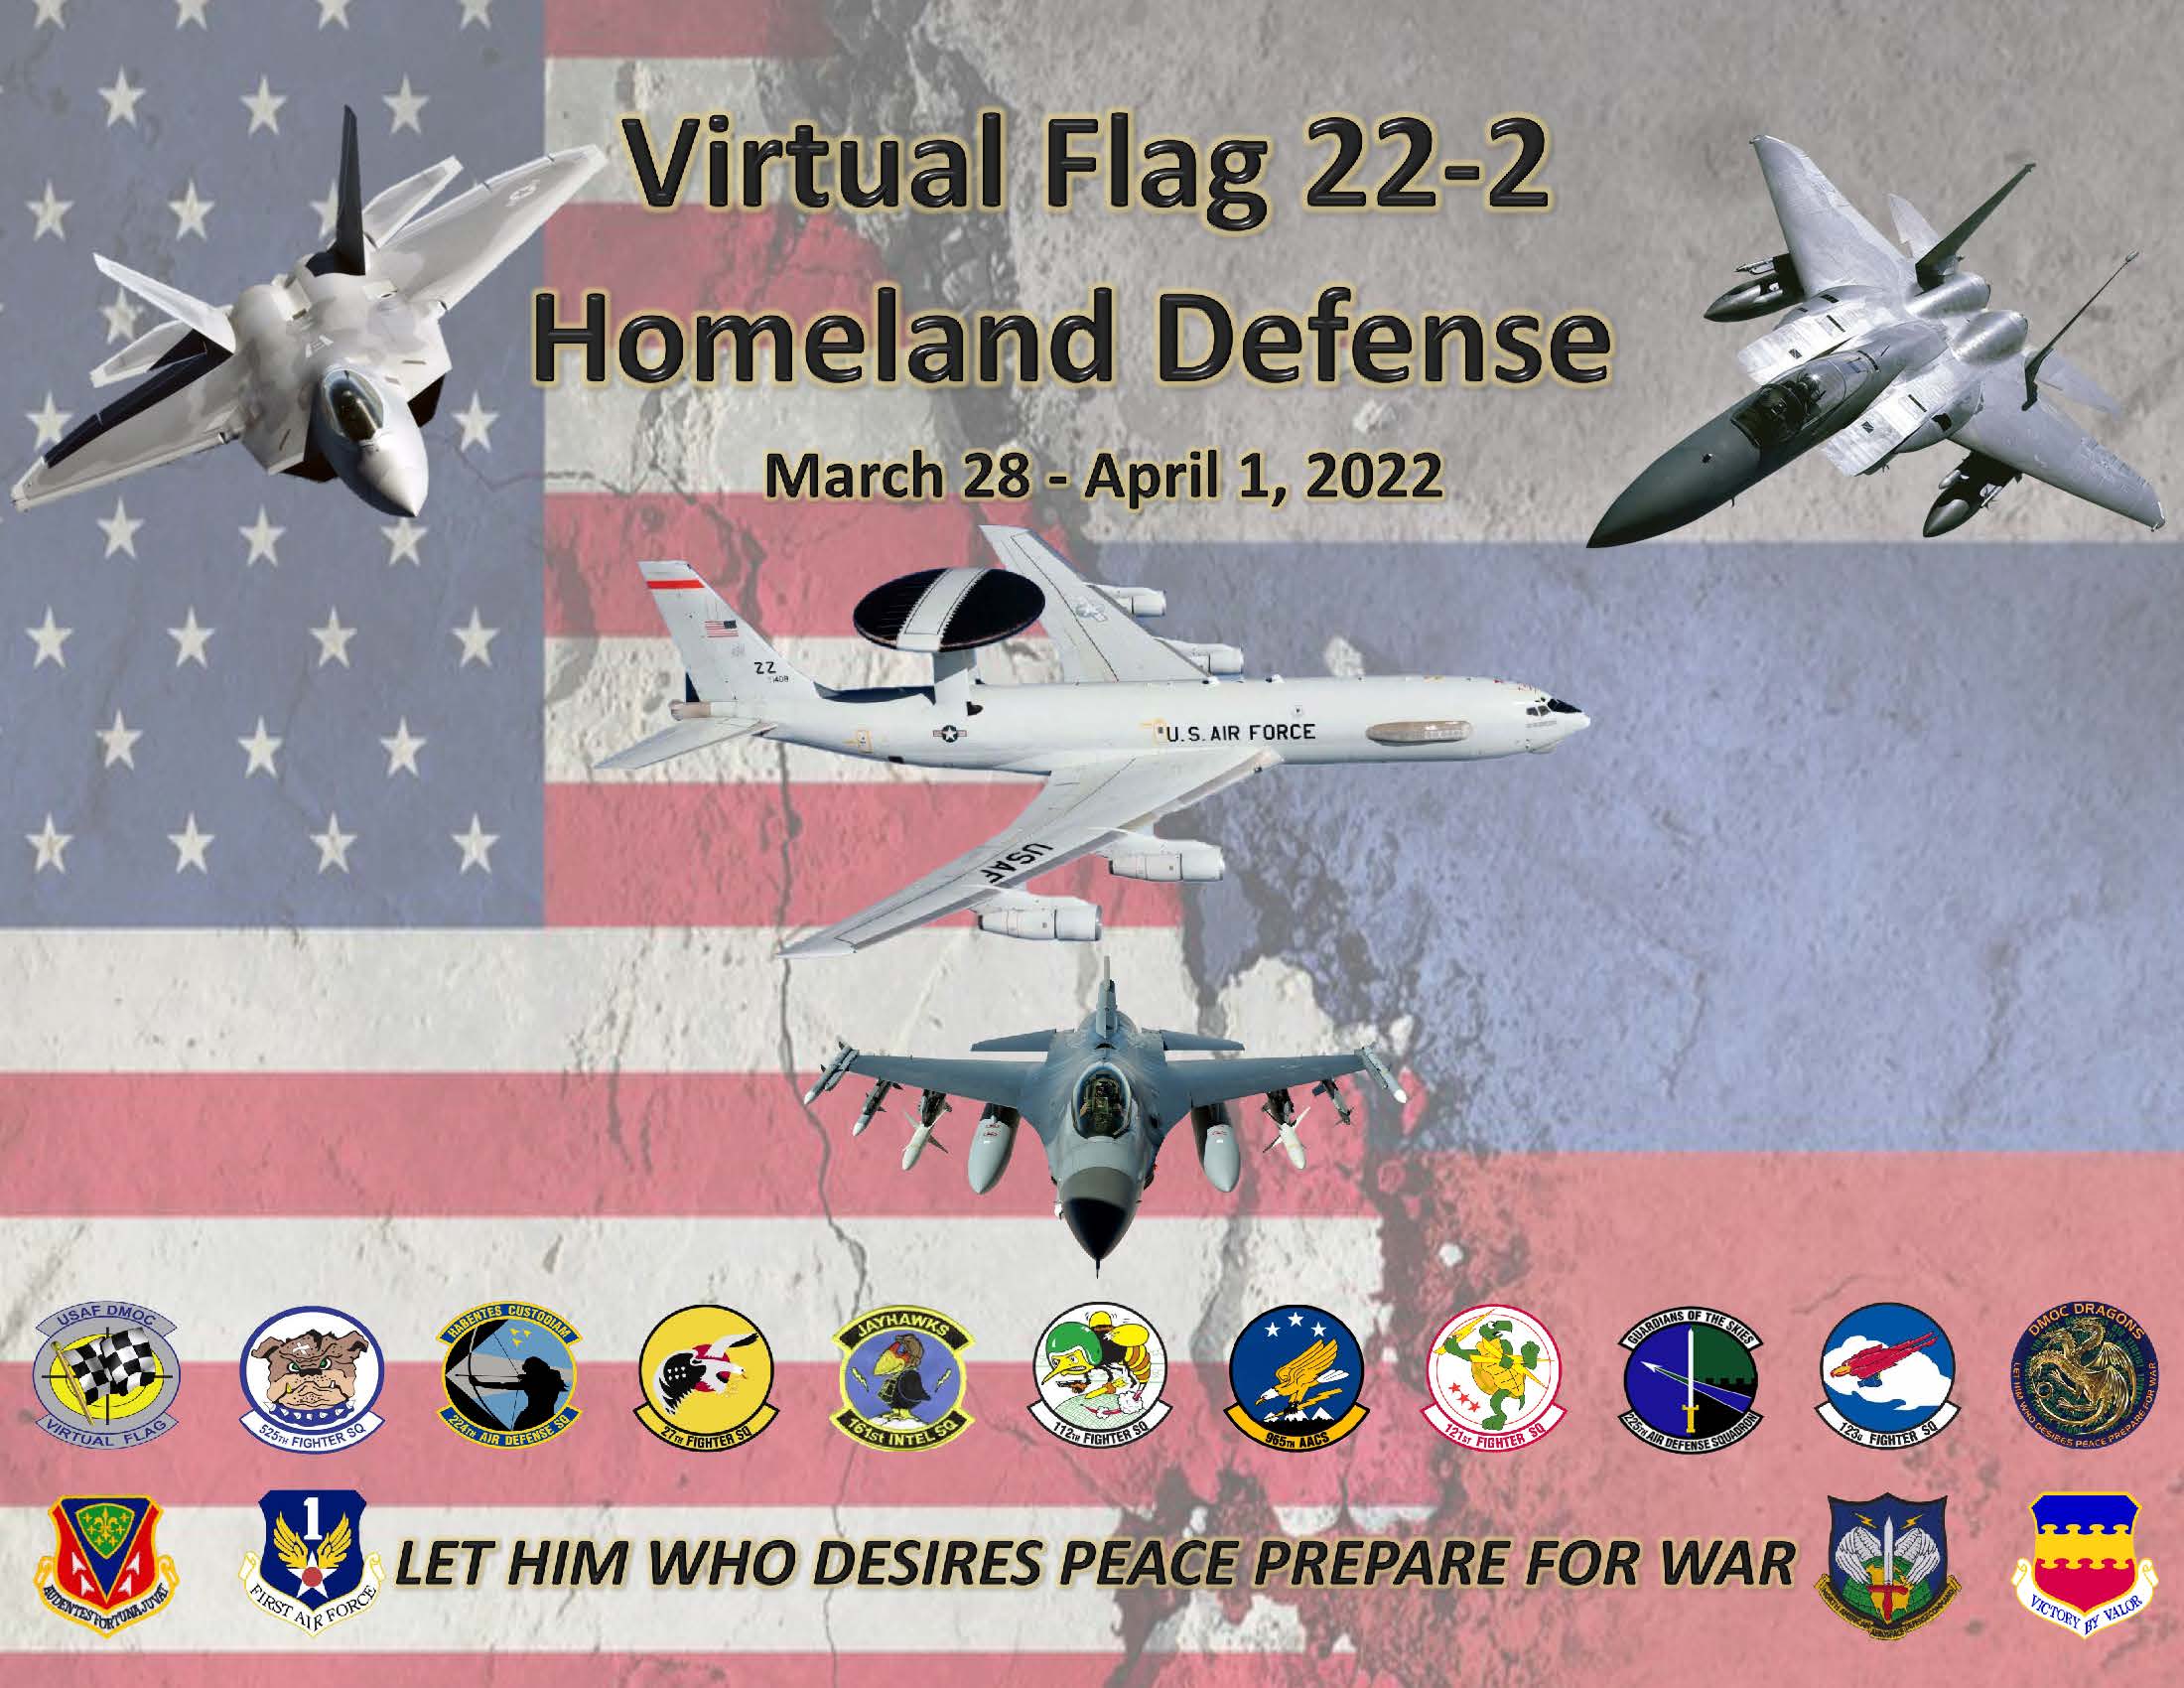 VIRTUAL FLAG Homeland Defense exercise sharpens skills, deters enemy